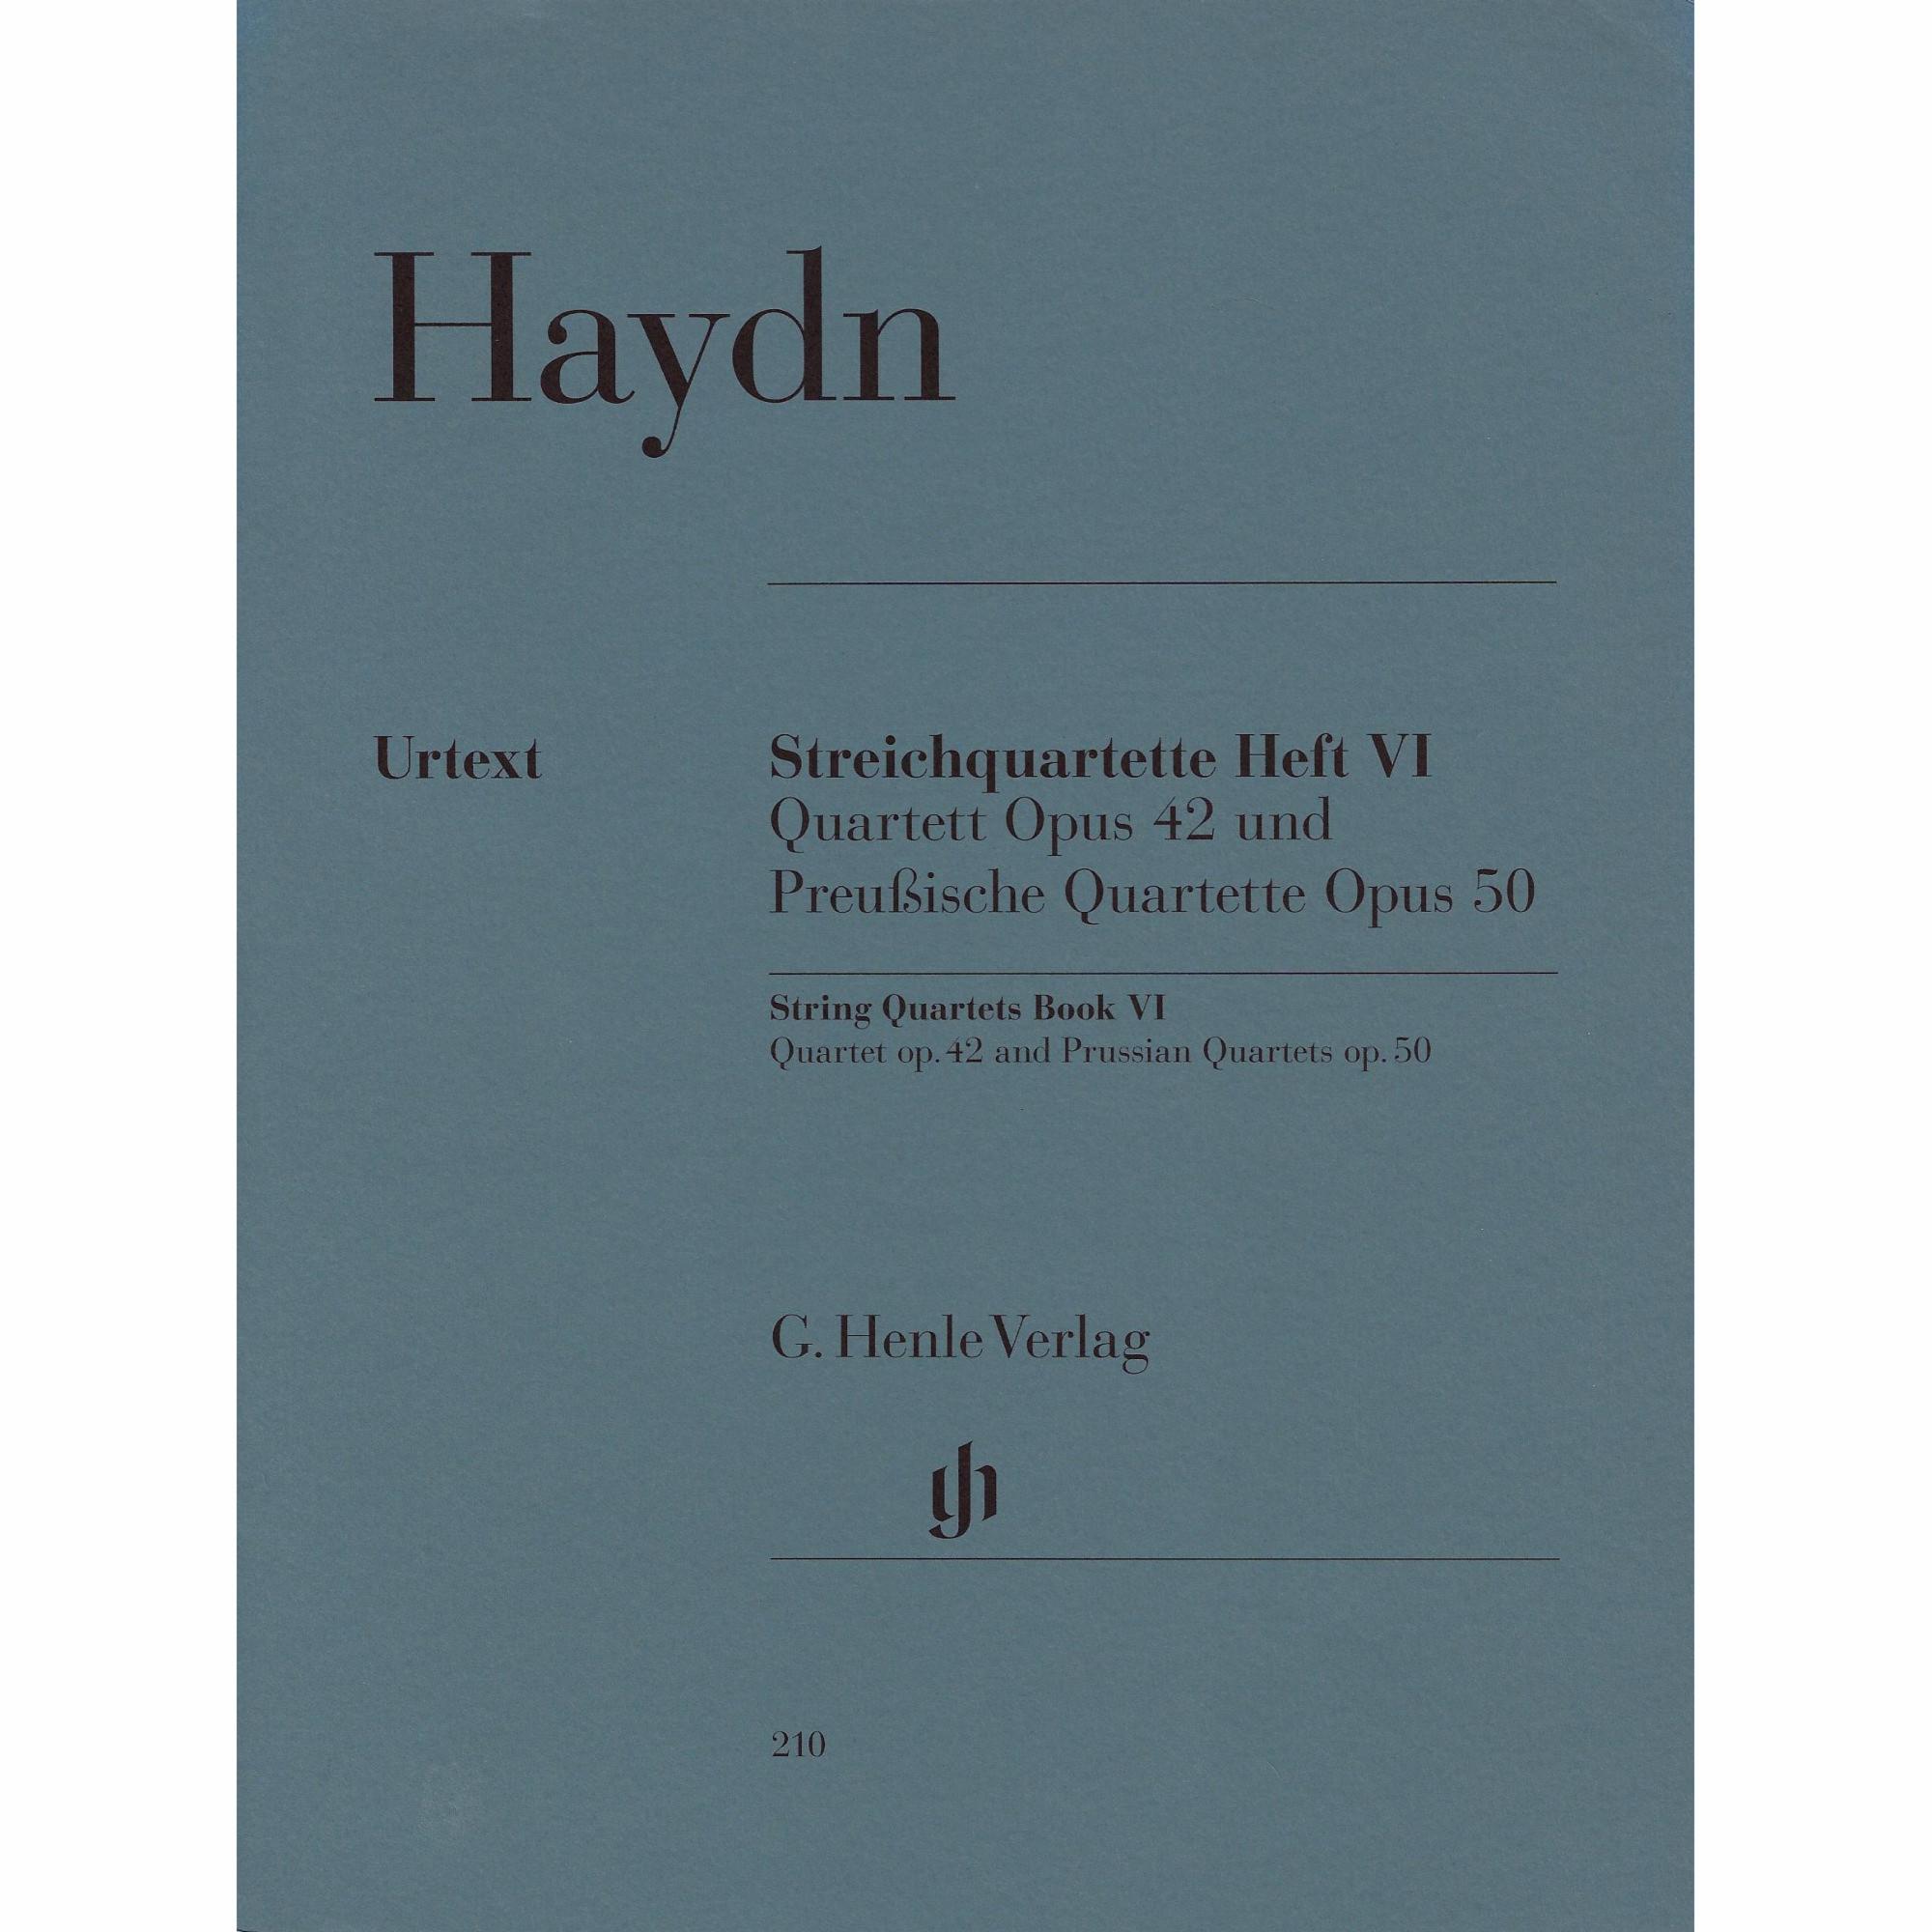 Haydn -- String Quartets, Book VI